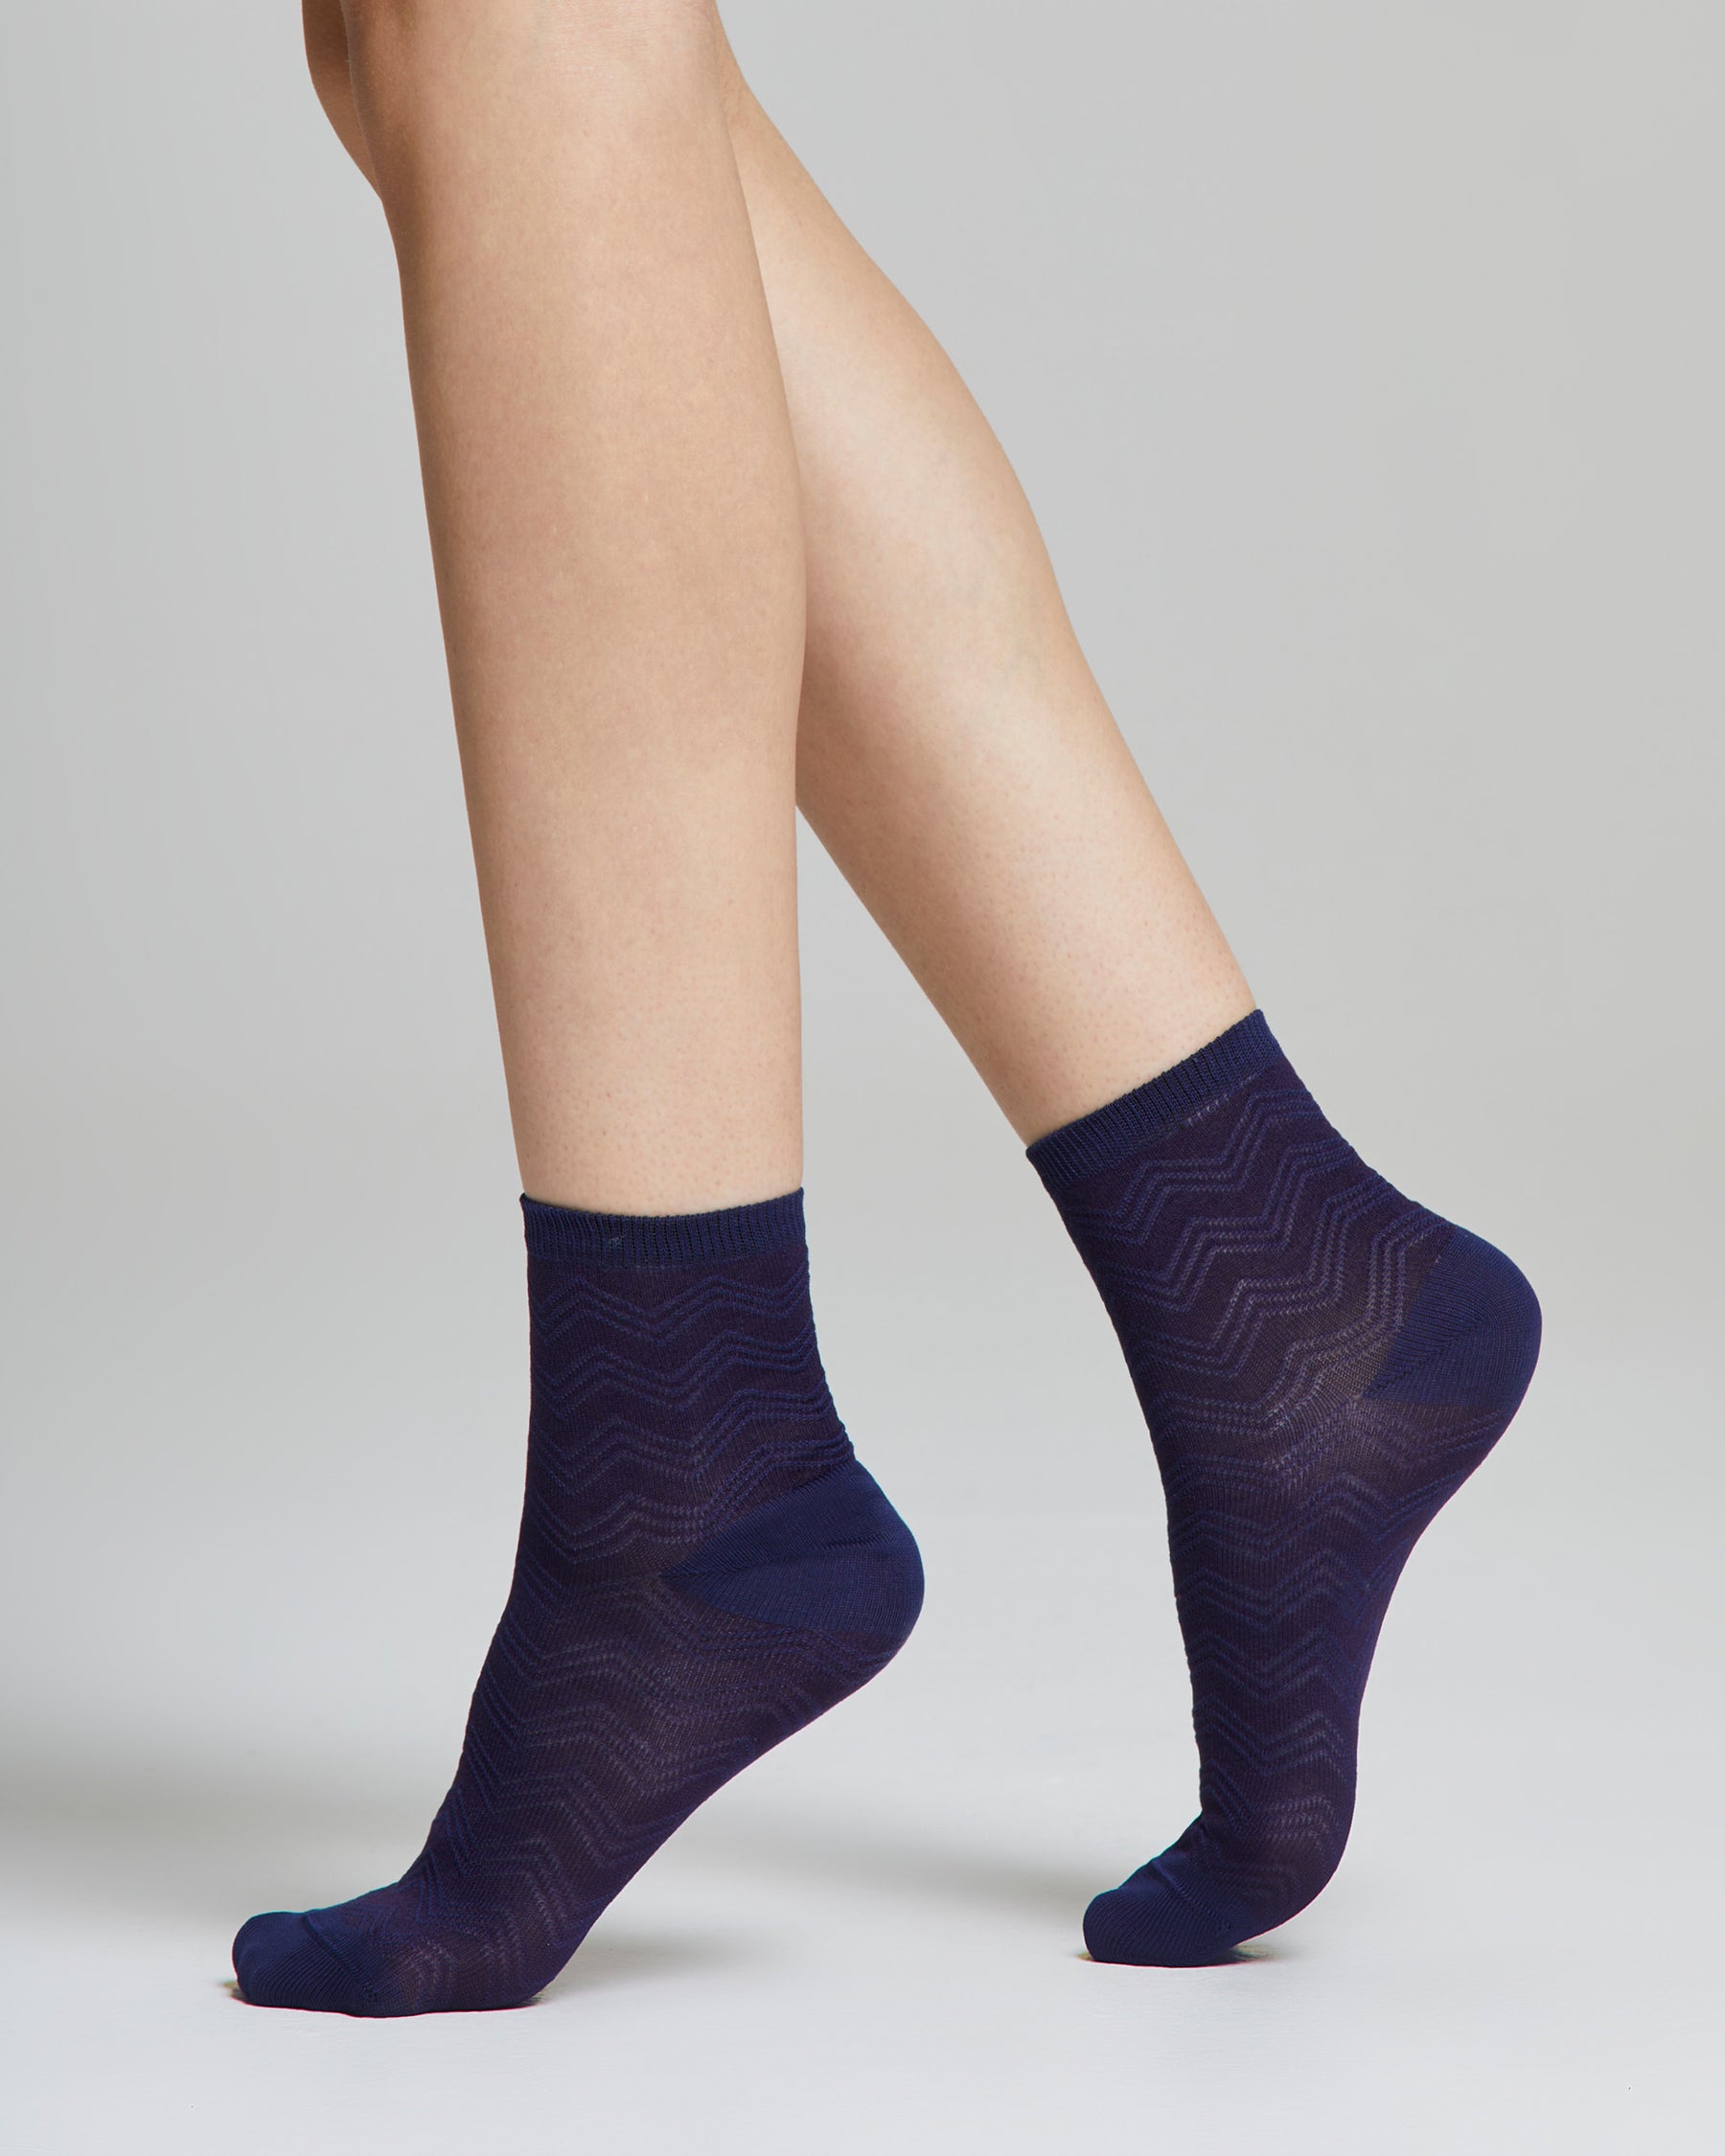 Nina cotton socks with chevron pattern